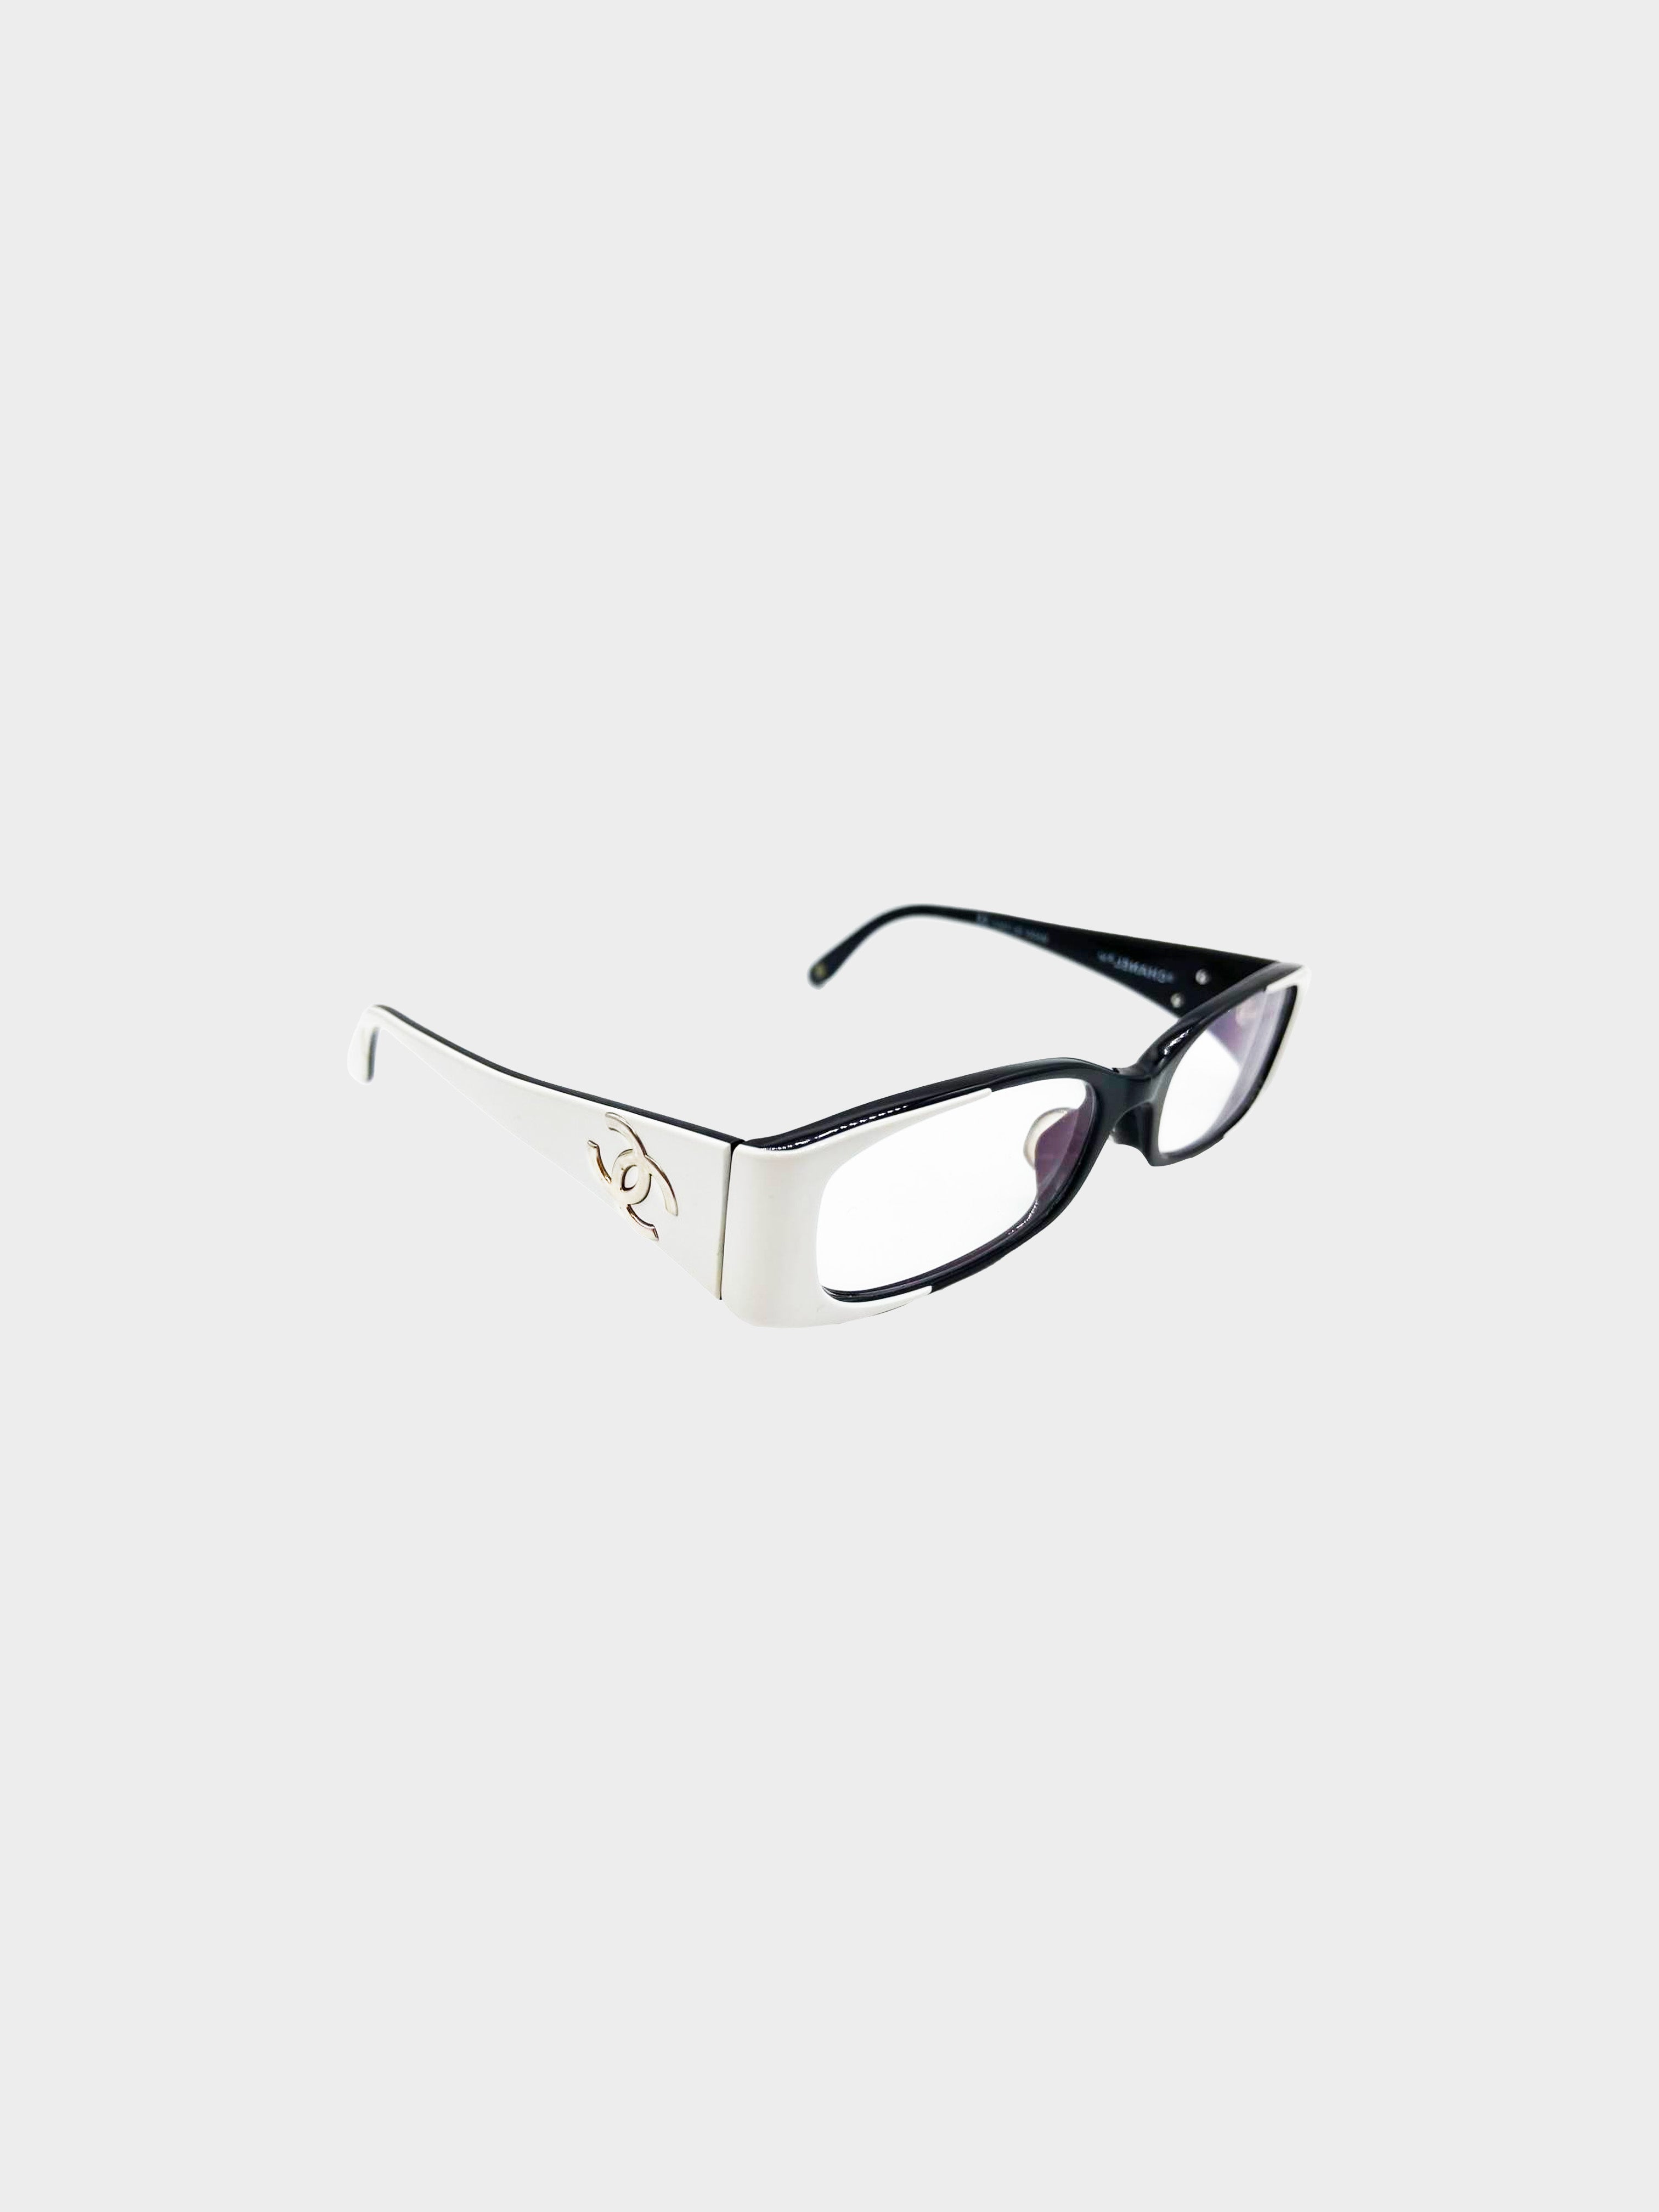 Vintage CHANEL sunglasses w/Swarovski crystal, early 2000s, 4093-B color  17011